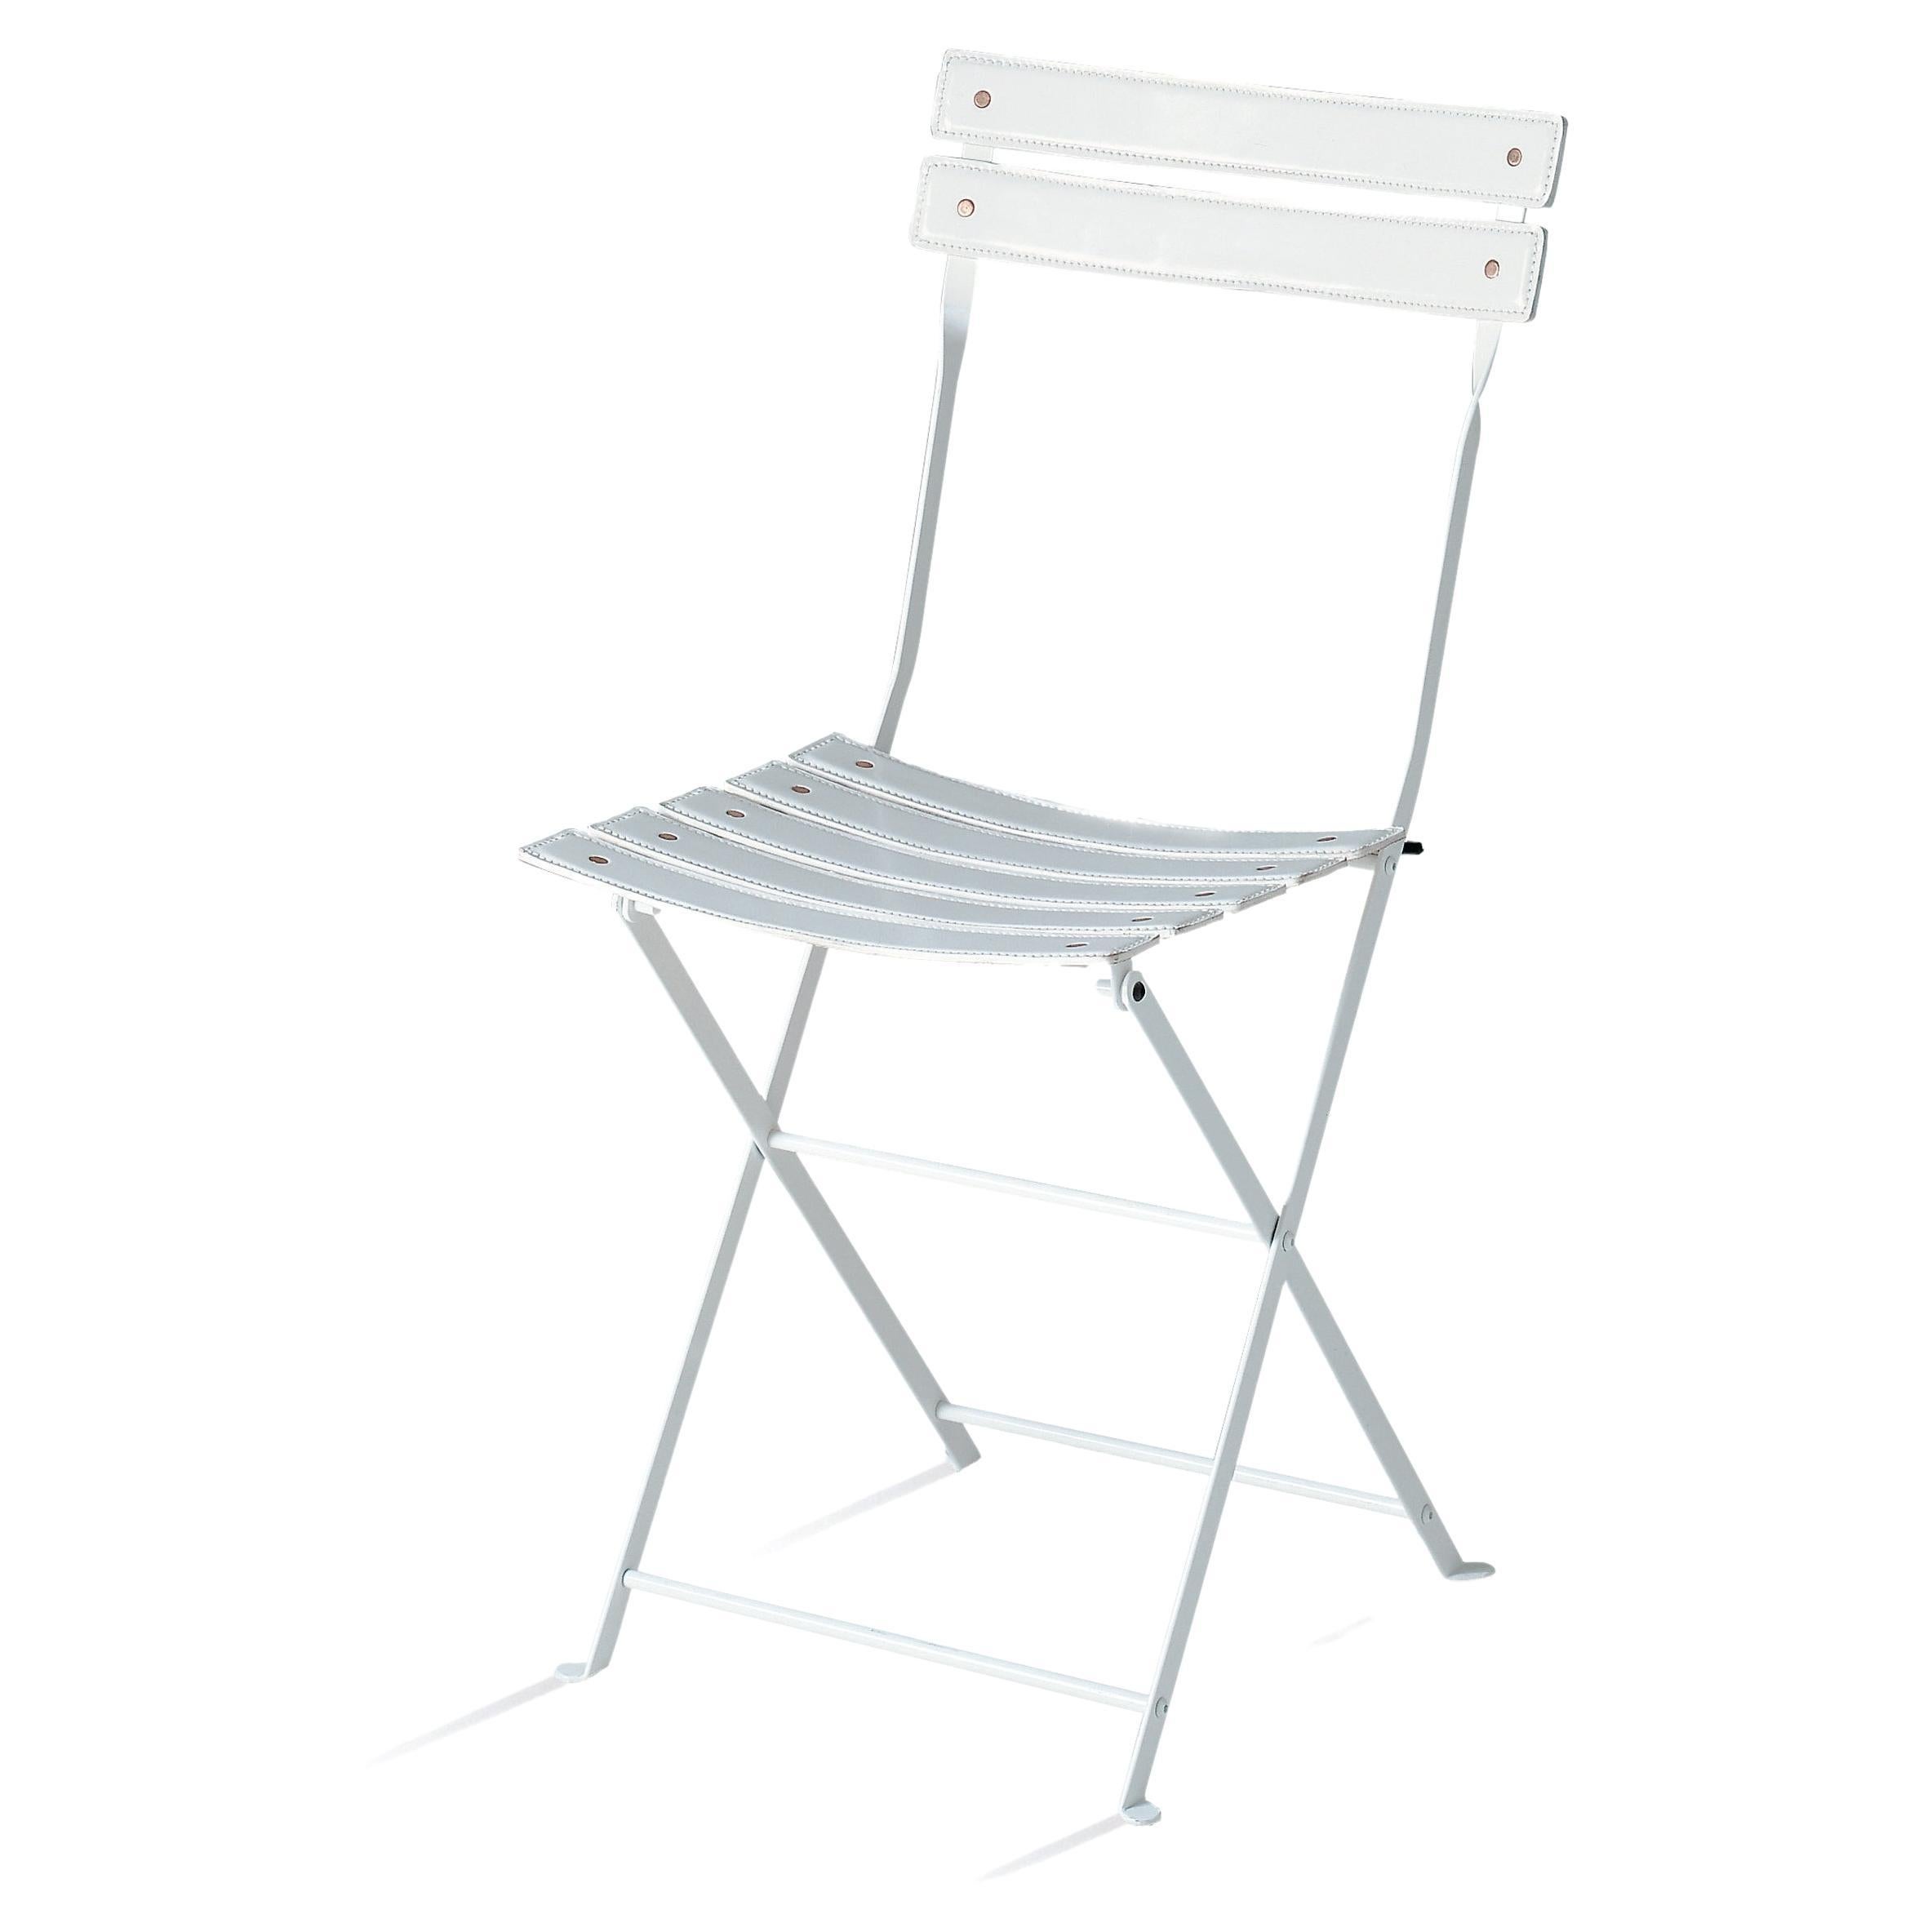 Zanotta Celestina Folding Chair in White Painted Steel Frame by Marco Zanuso